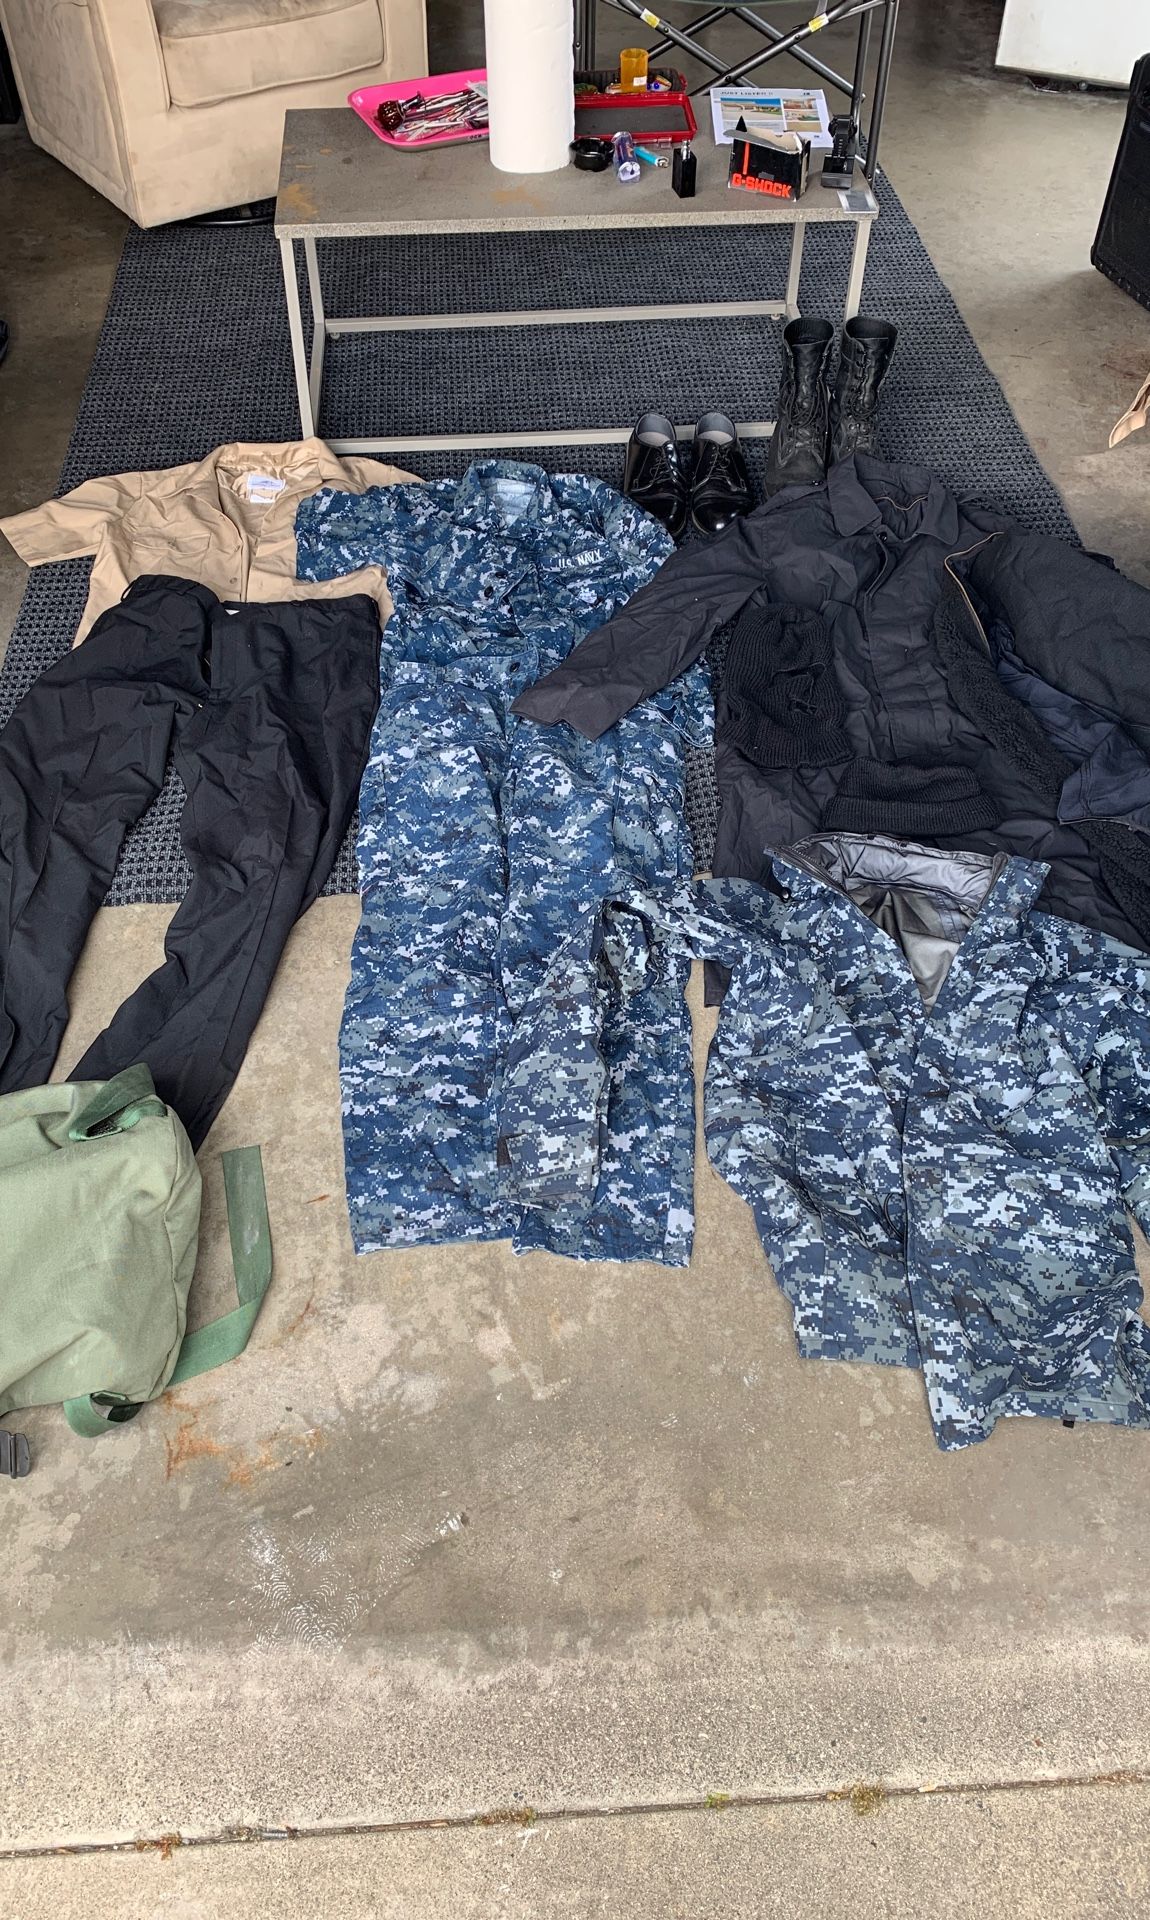 Navy uniforms and sea bag items